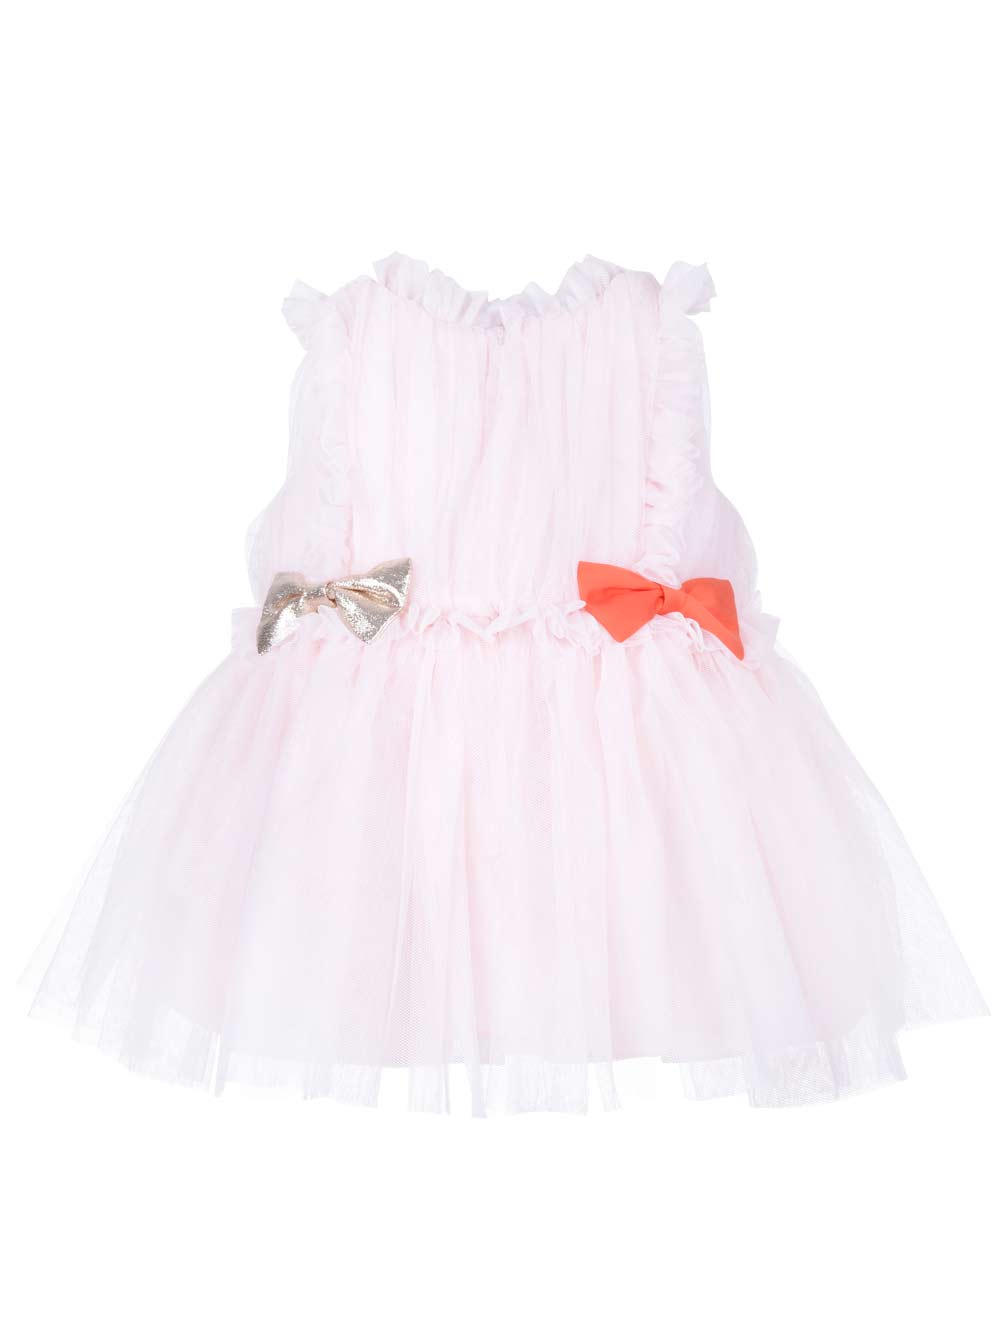 PREORDER: Ruffle Baby Dress